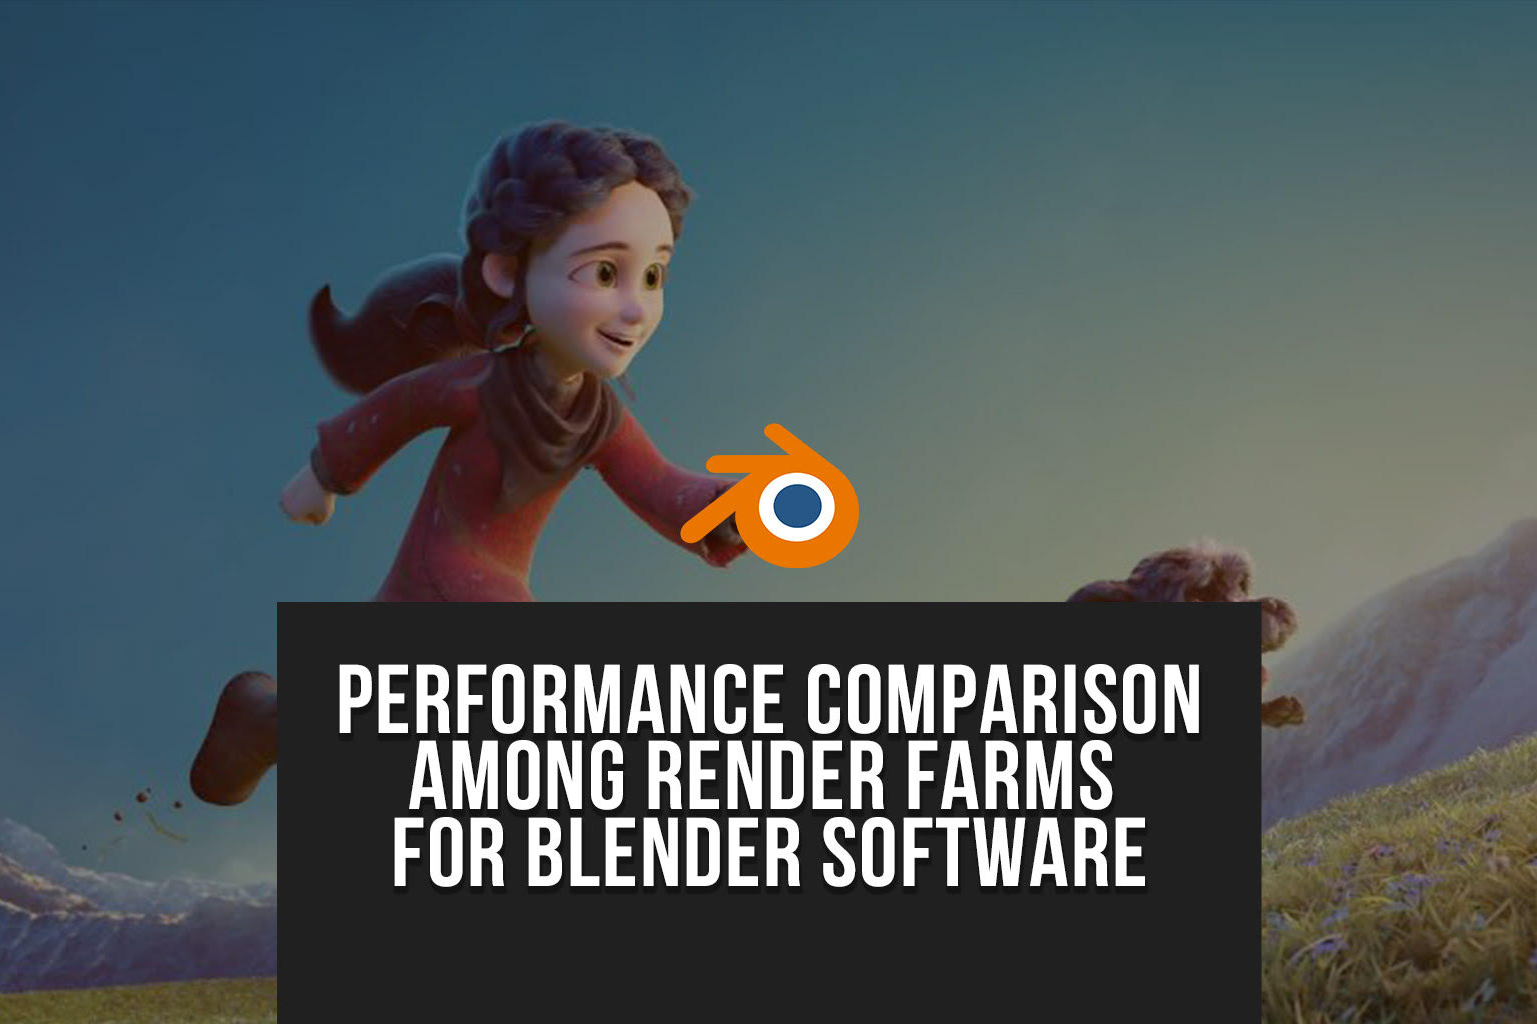 Performance comparison among render farms for blender software